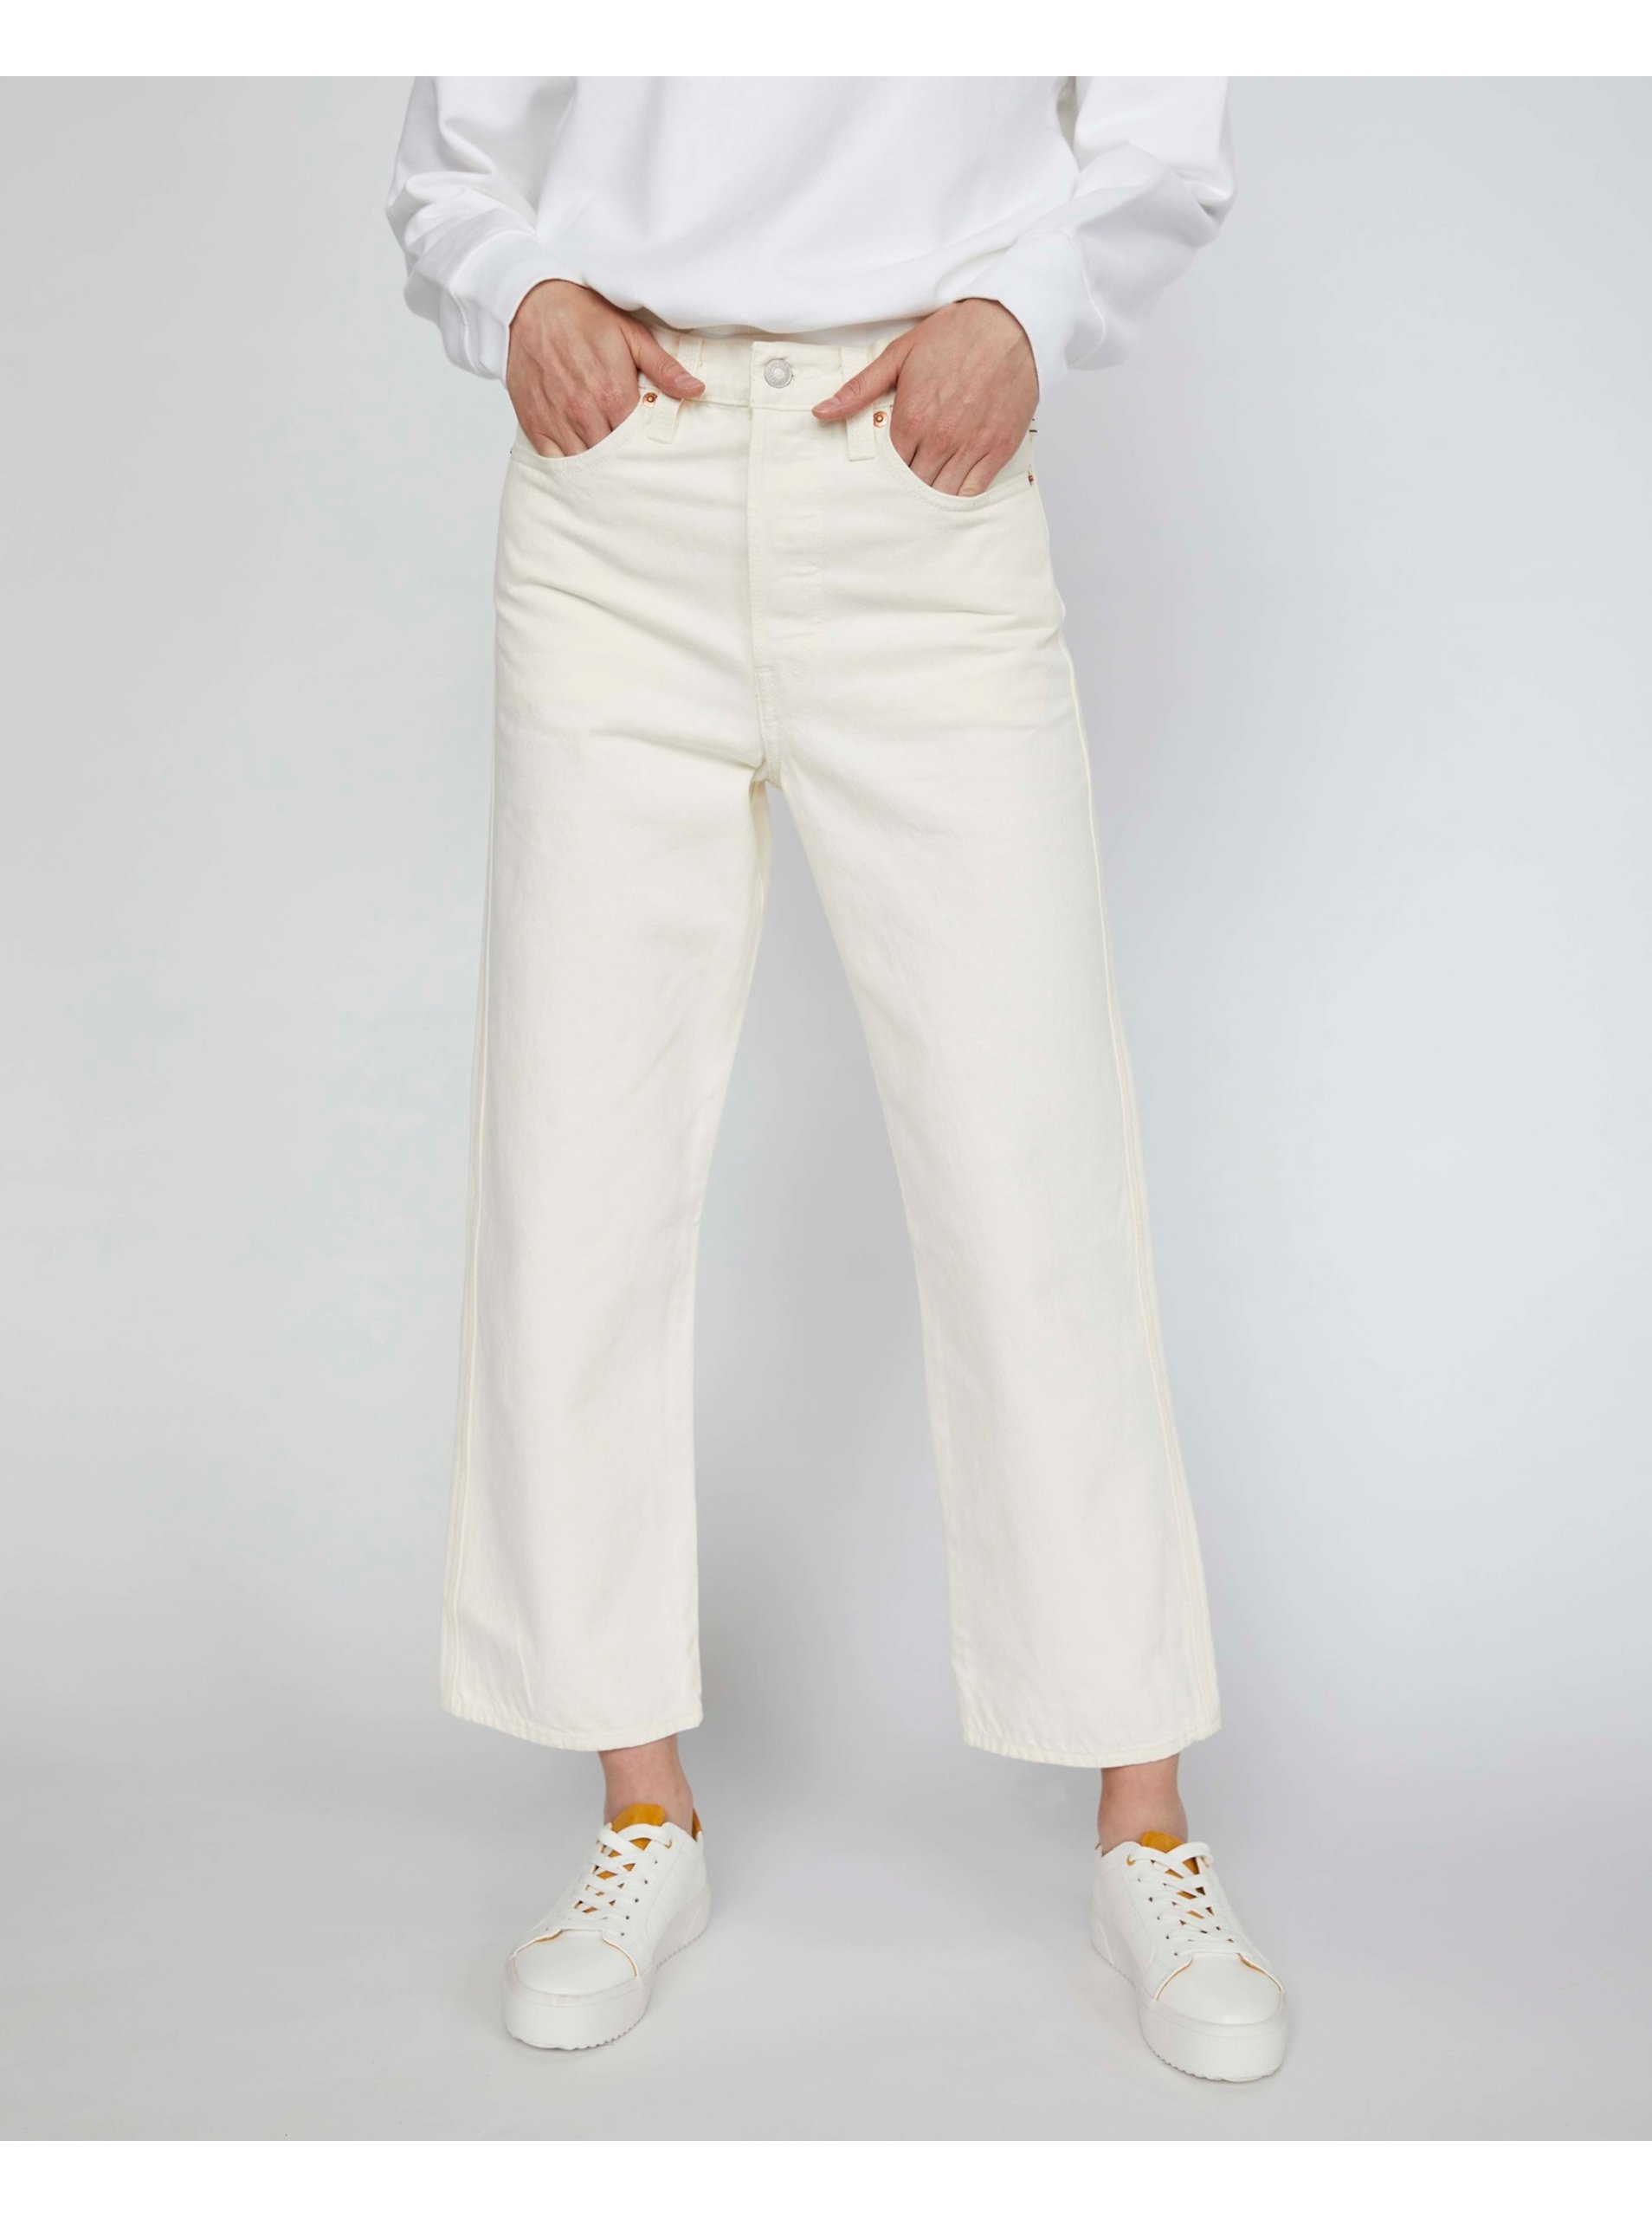 Levi's Creamy Women's Straight Fit Jeans - Women's®